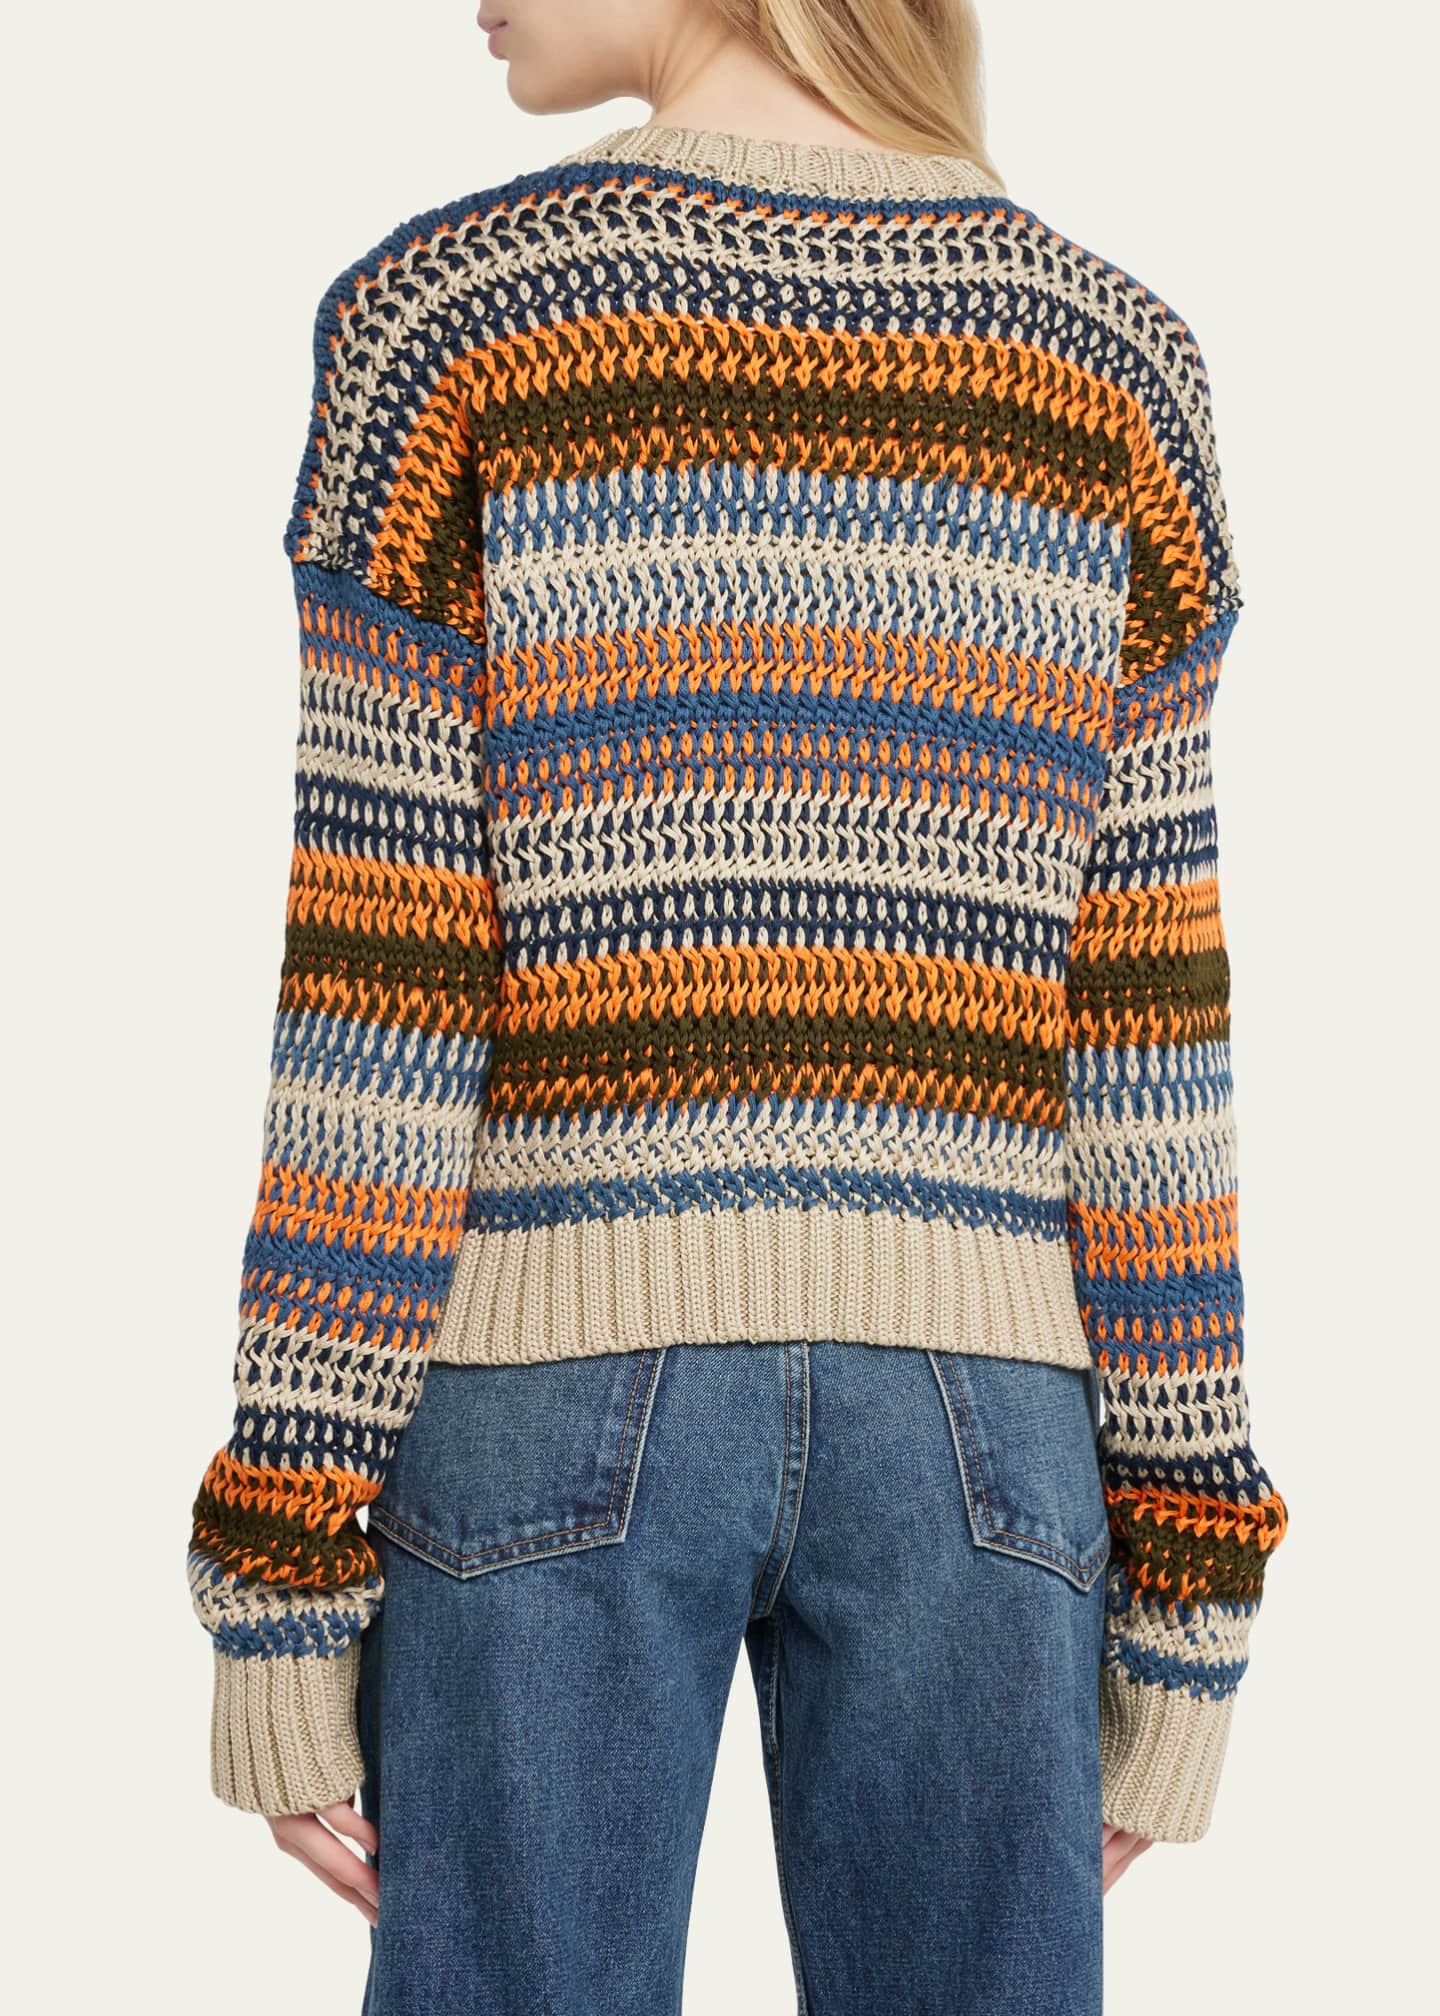 NSF Clothing Blayne Crochet Cropped Sweater - Bergdorf Goodman